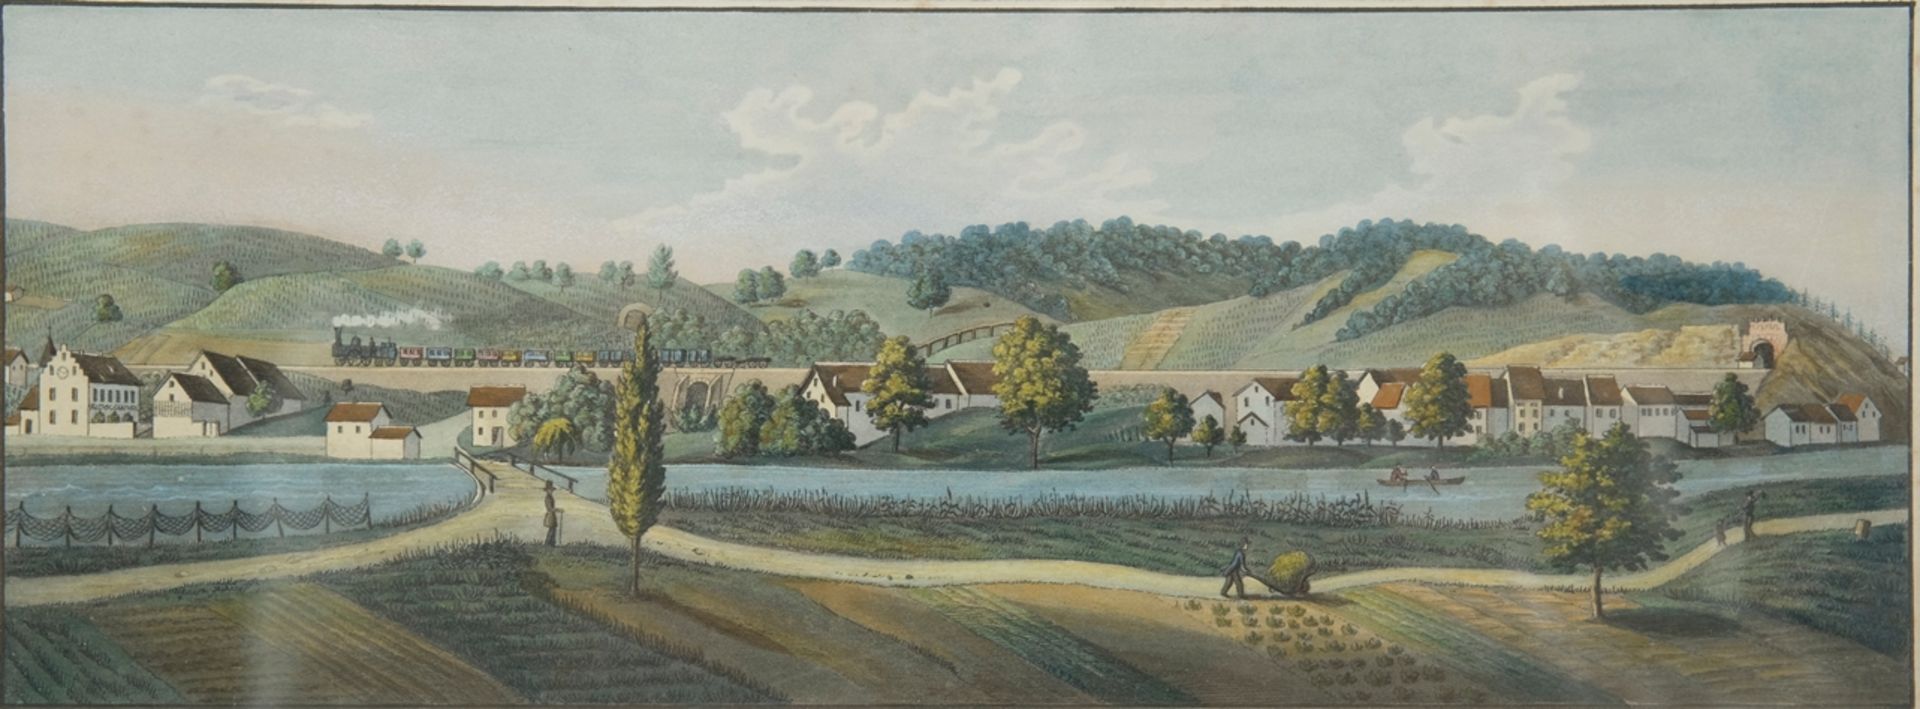 Butz, A.B. (19th century) "Panorama von Isenstein", watercolour, early 19th century, 12 x 24.5 cm. 